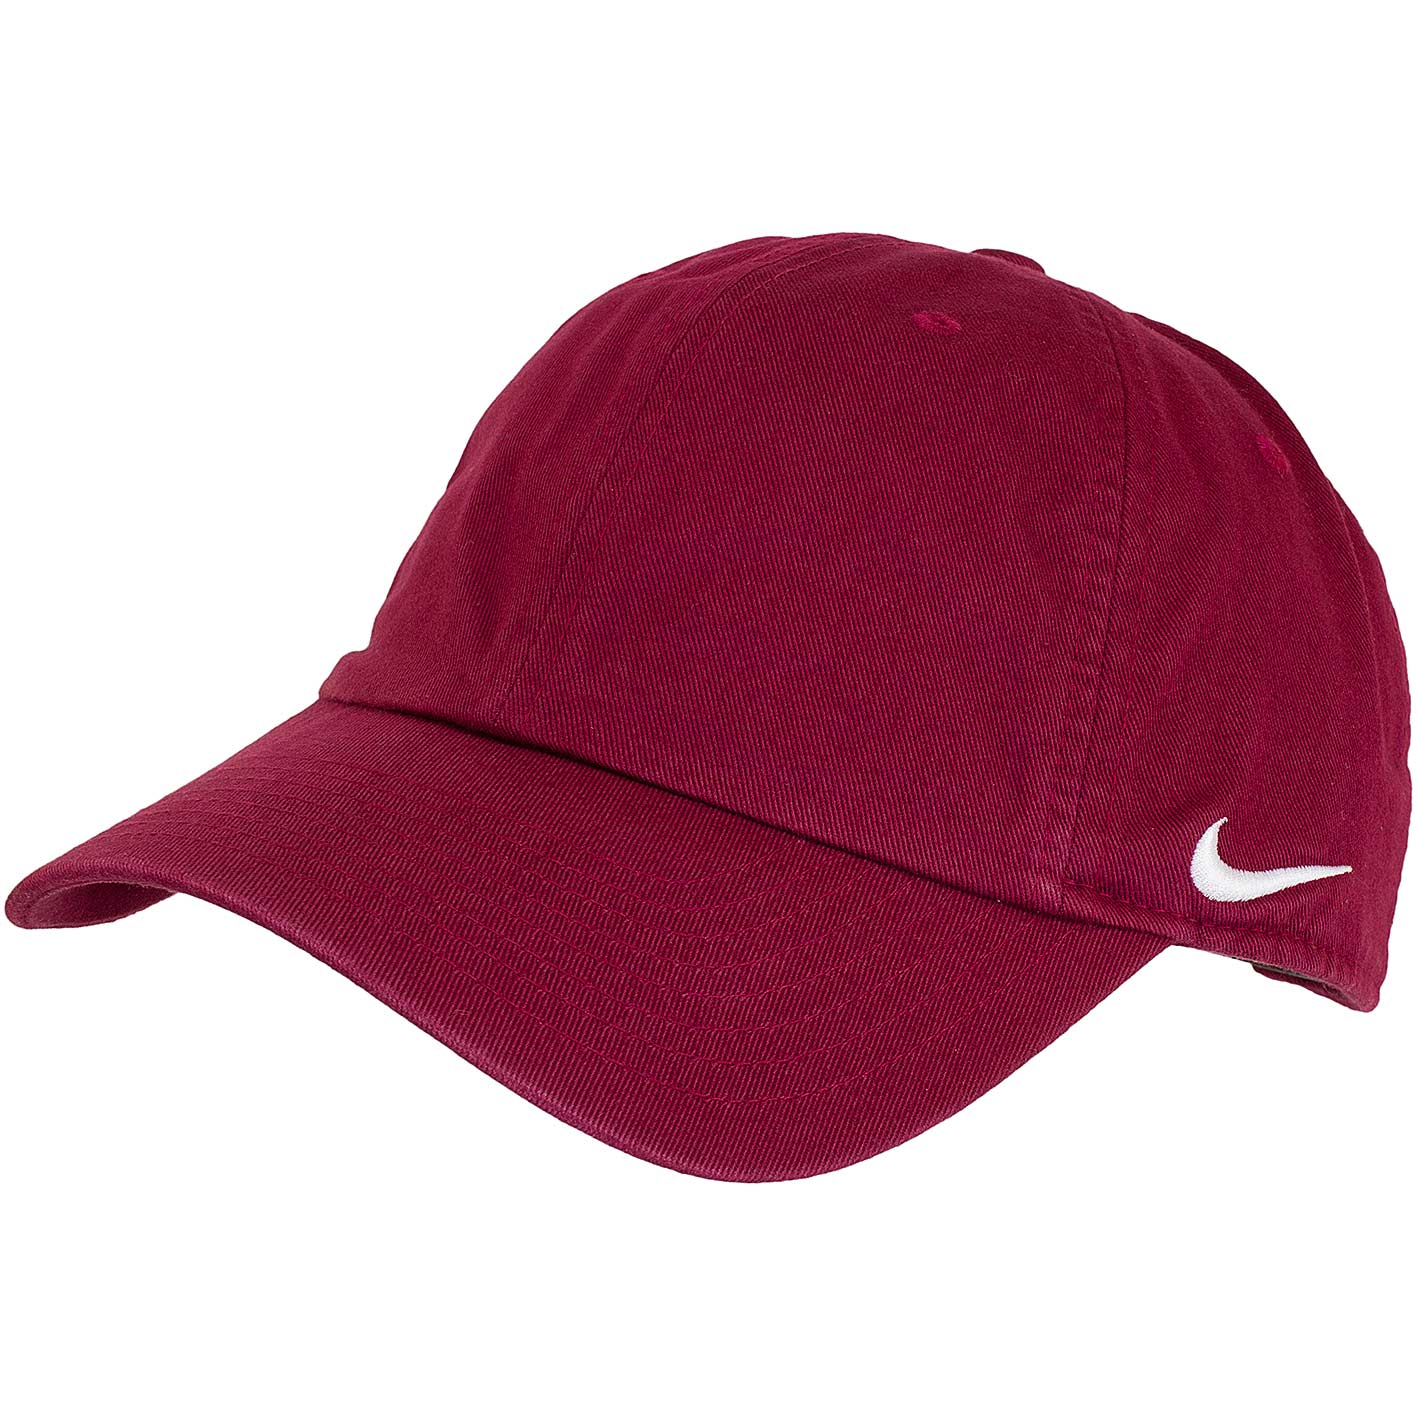 ☆ Nike Snapback Cap H86 weinrot/weiß - hier bestellen!